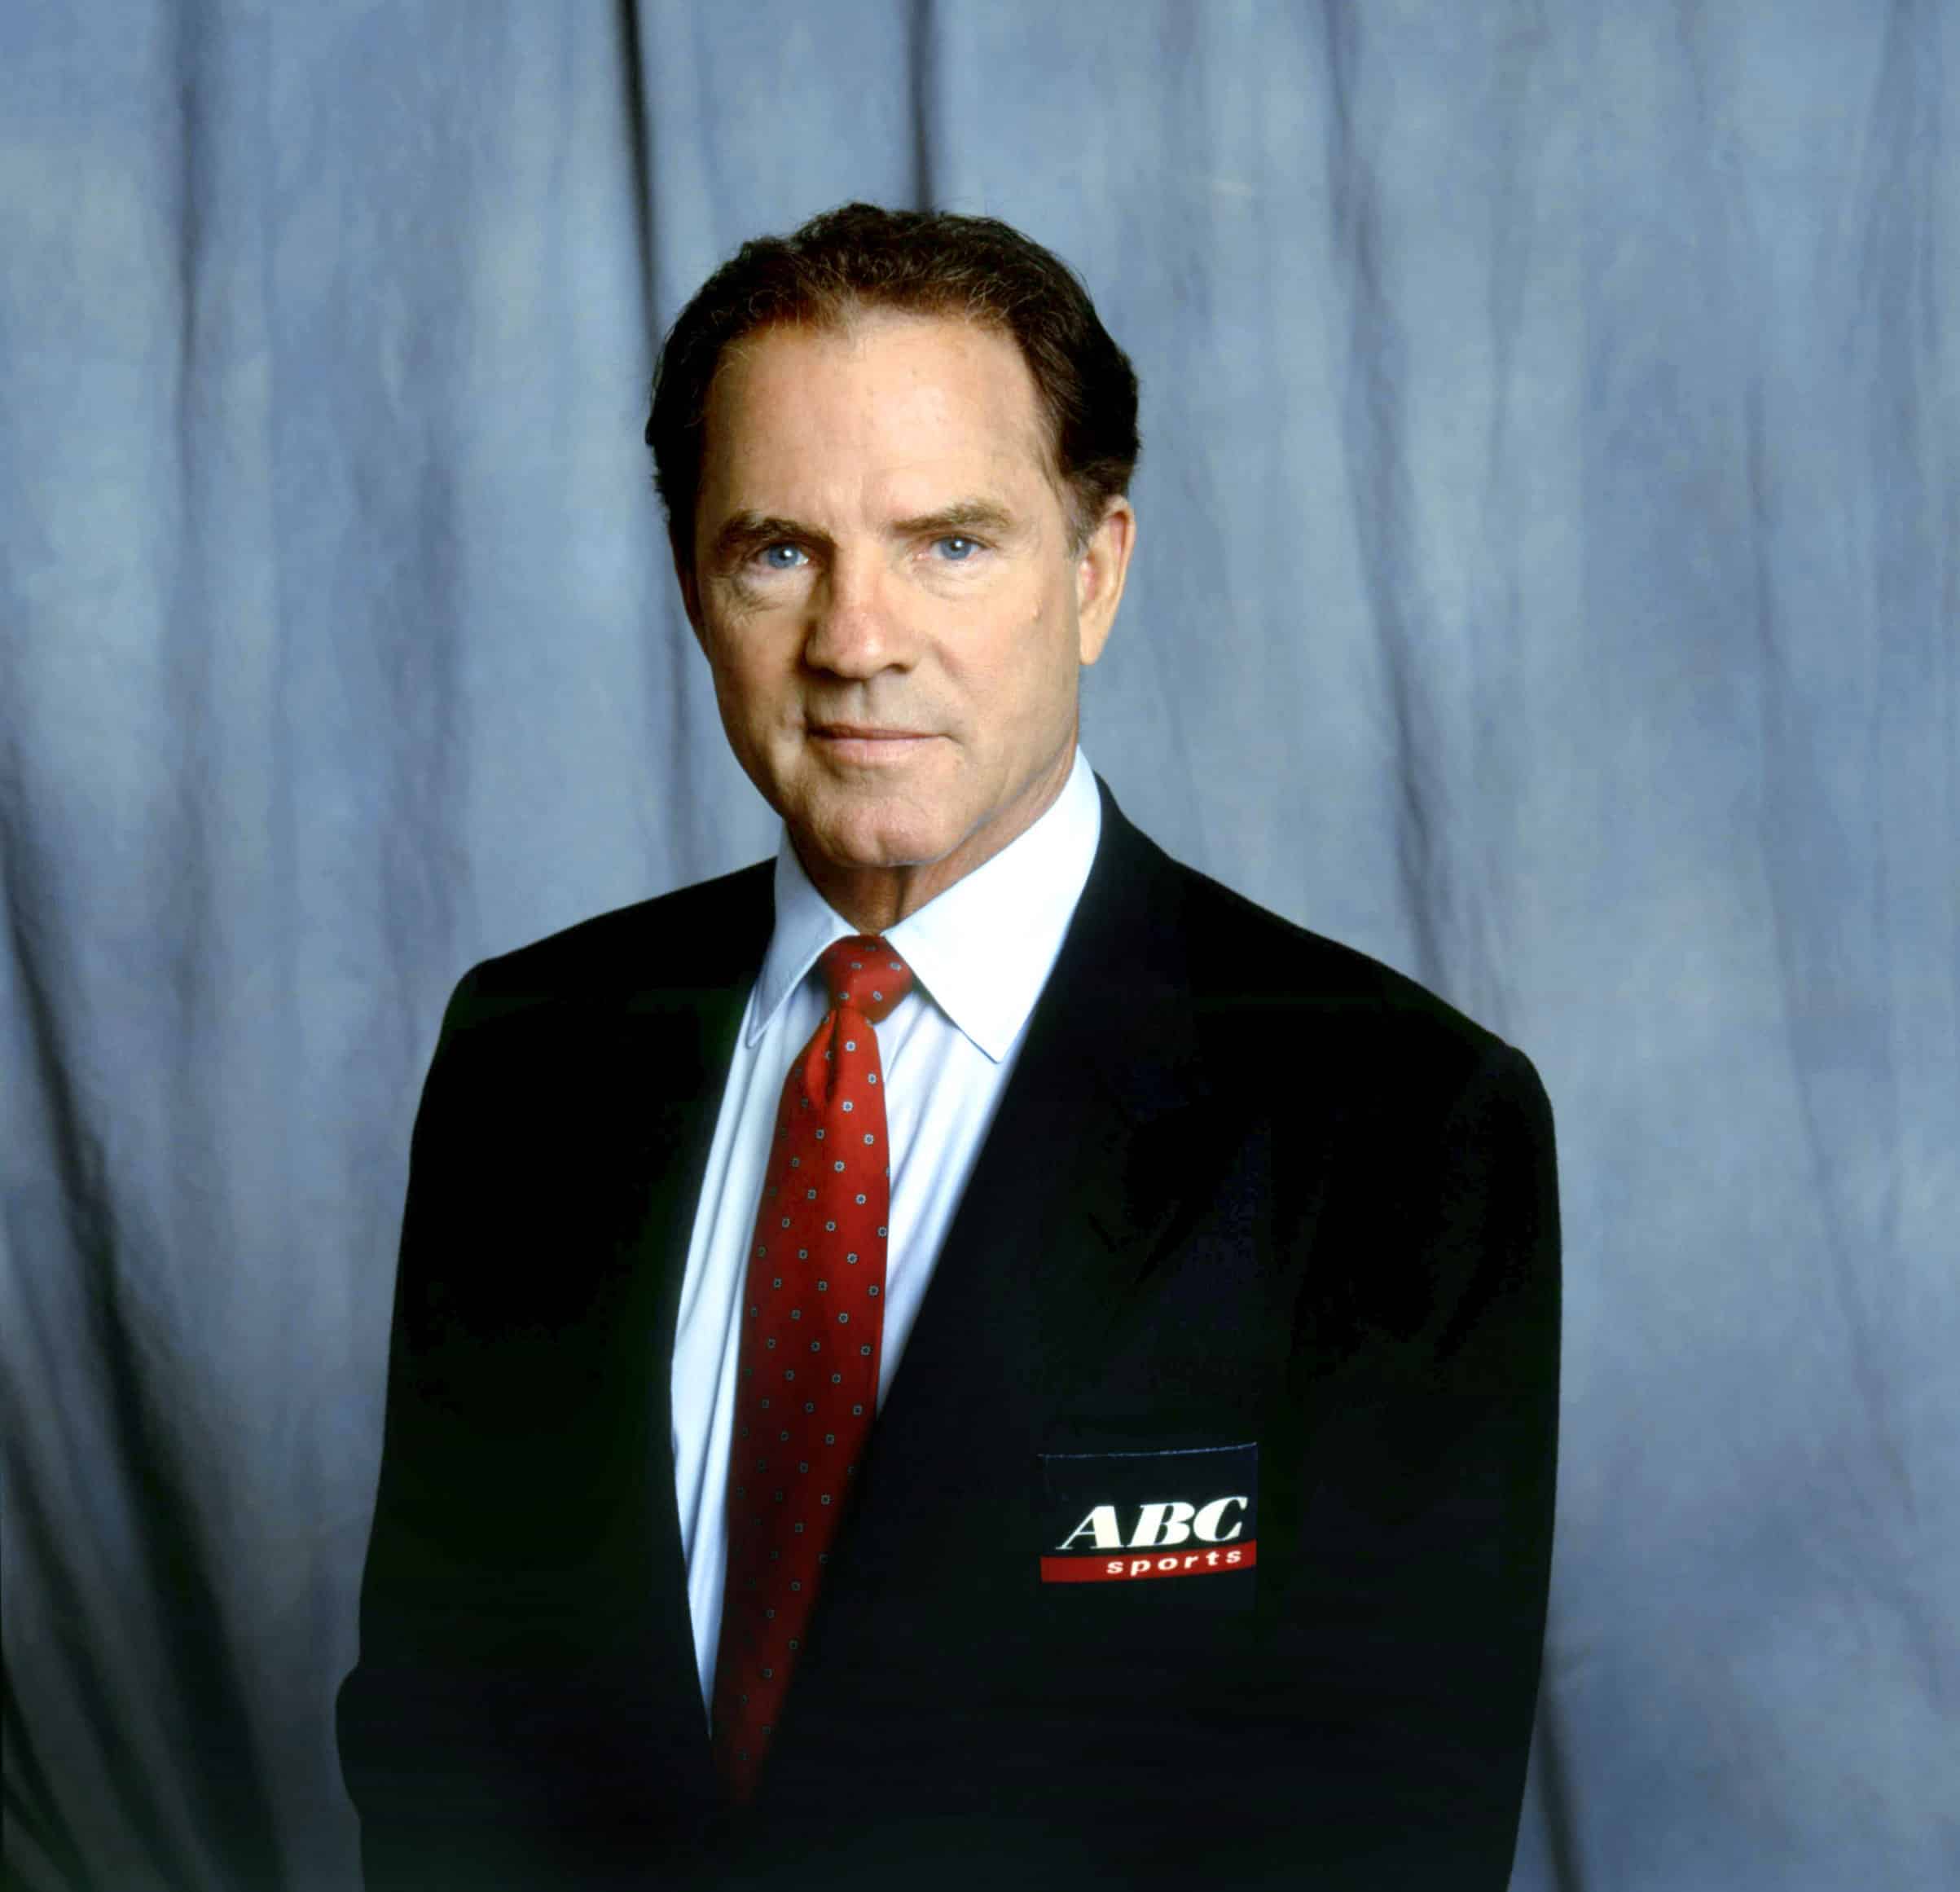 Frank Gifford, ABC Sportscaster, ca. 1990s